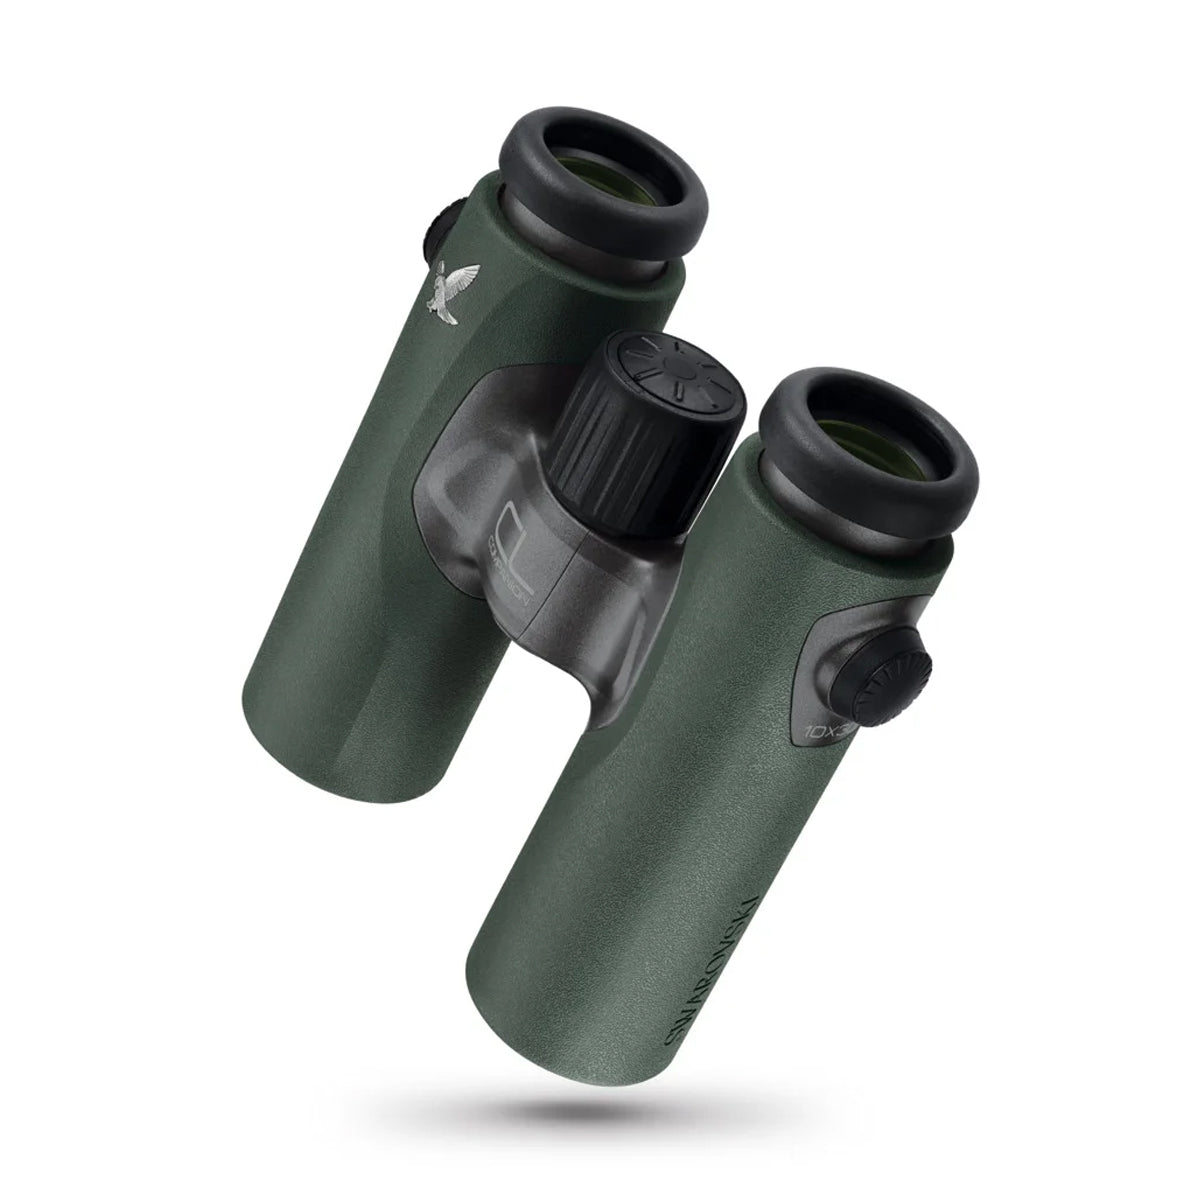 Swarovski CL Companion 8x30 (Green) Wild Nature Binoculars